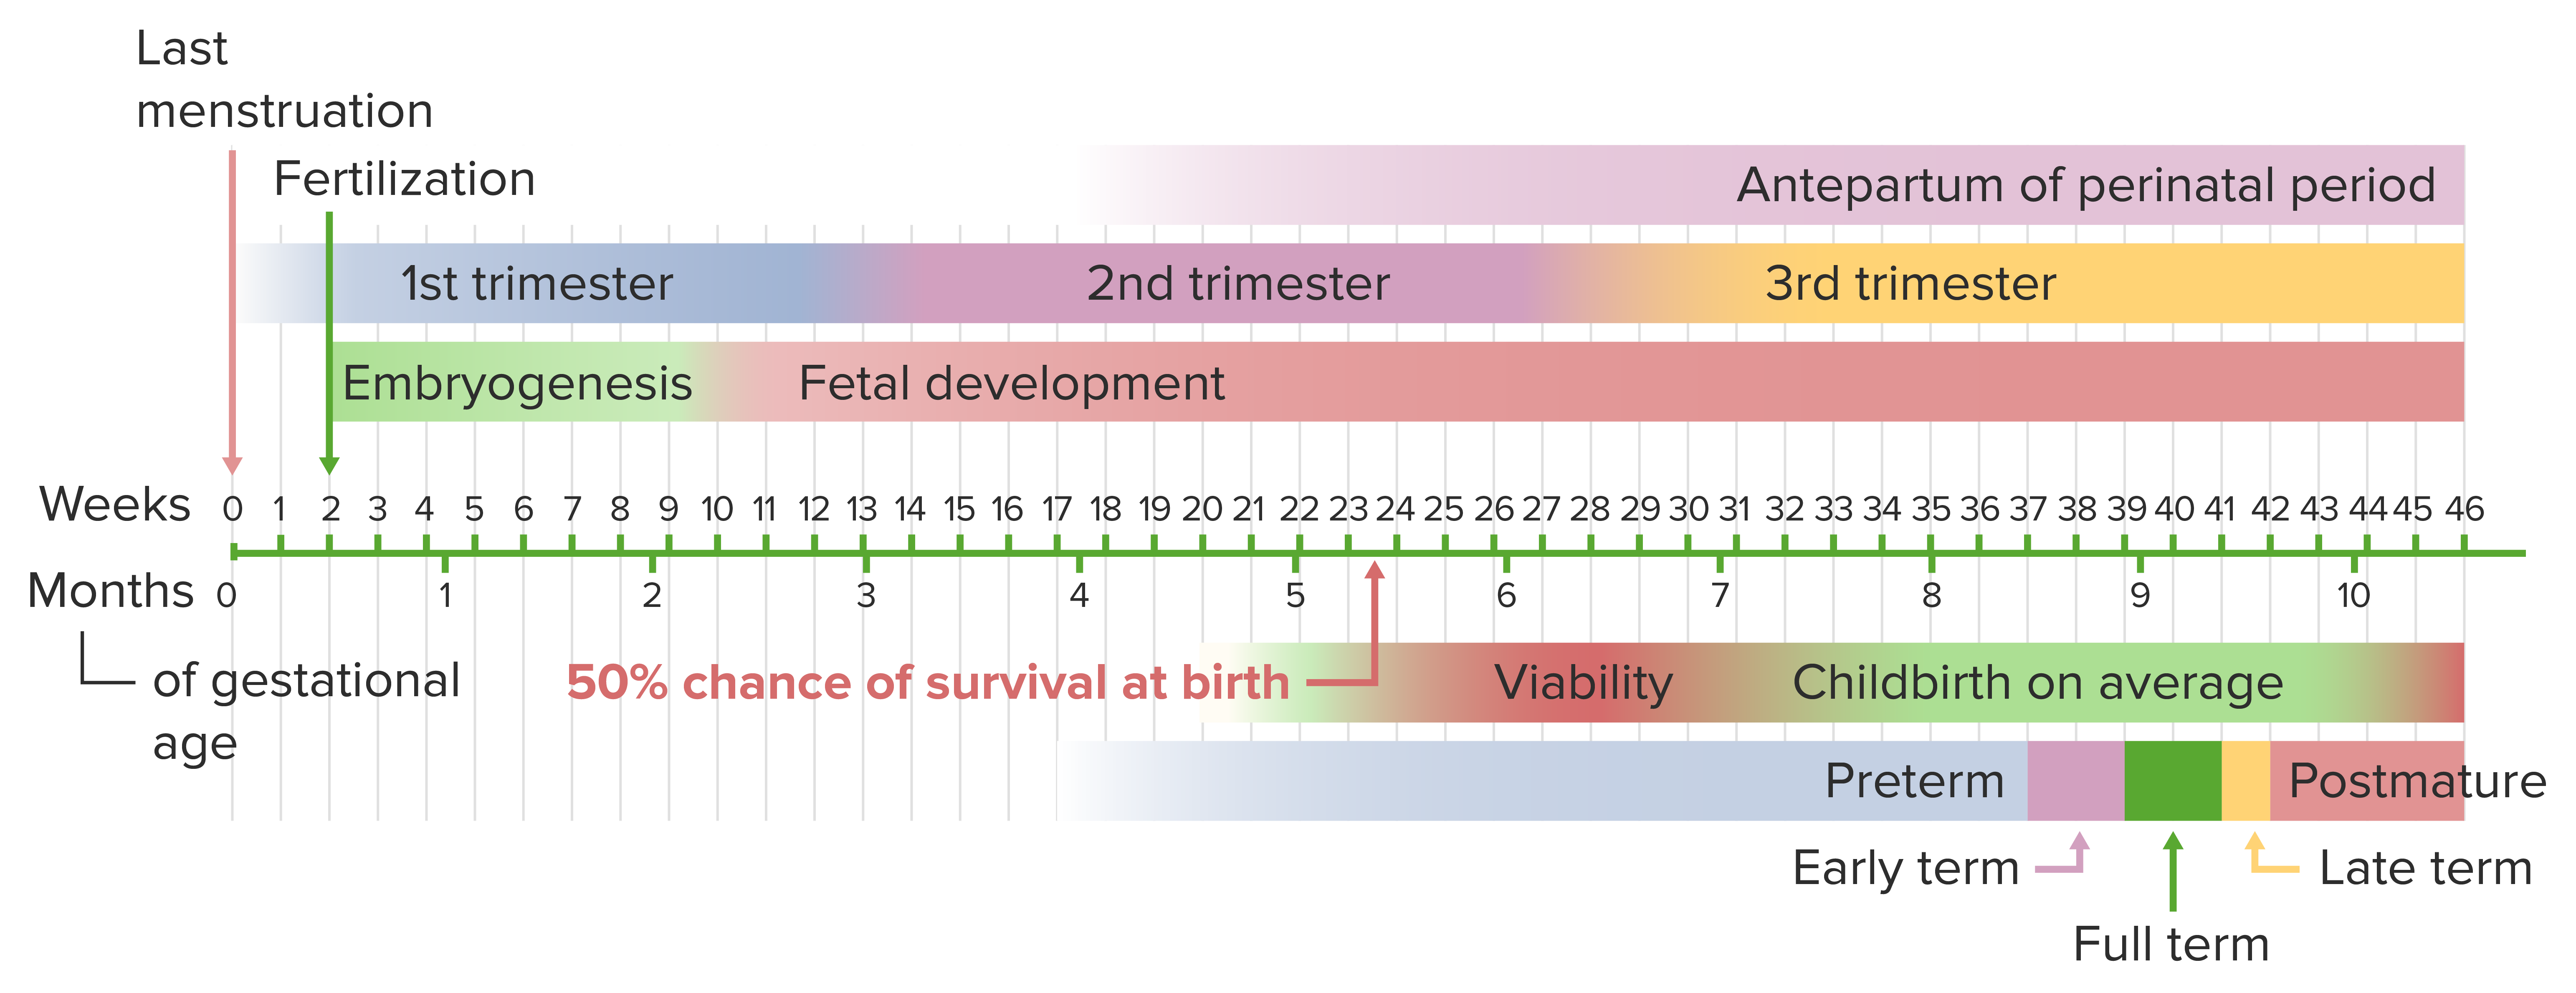 UTI and Pregnancy: Fertility, Gestation, and Postpartum